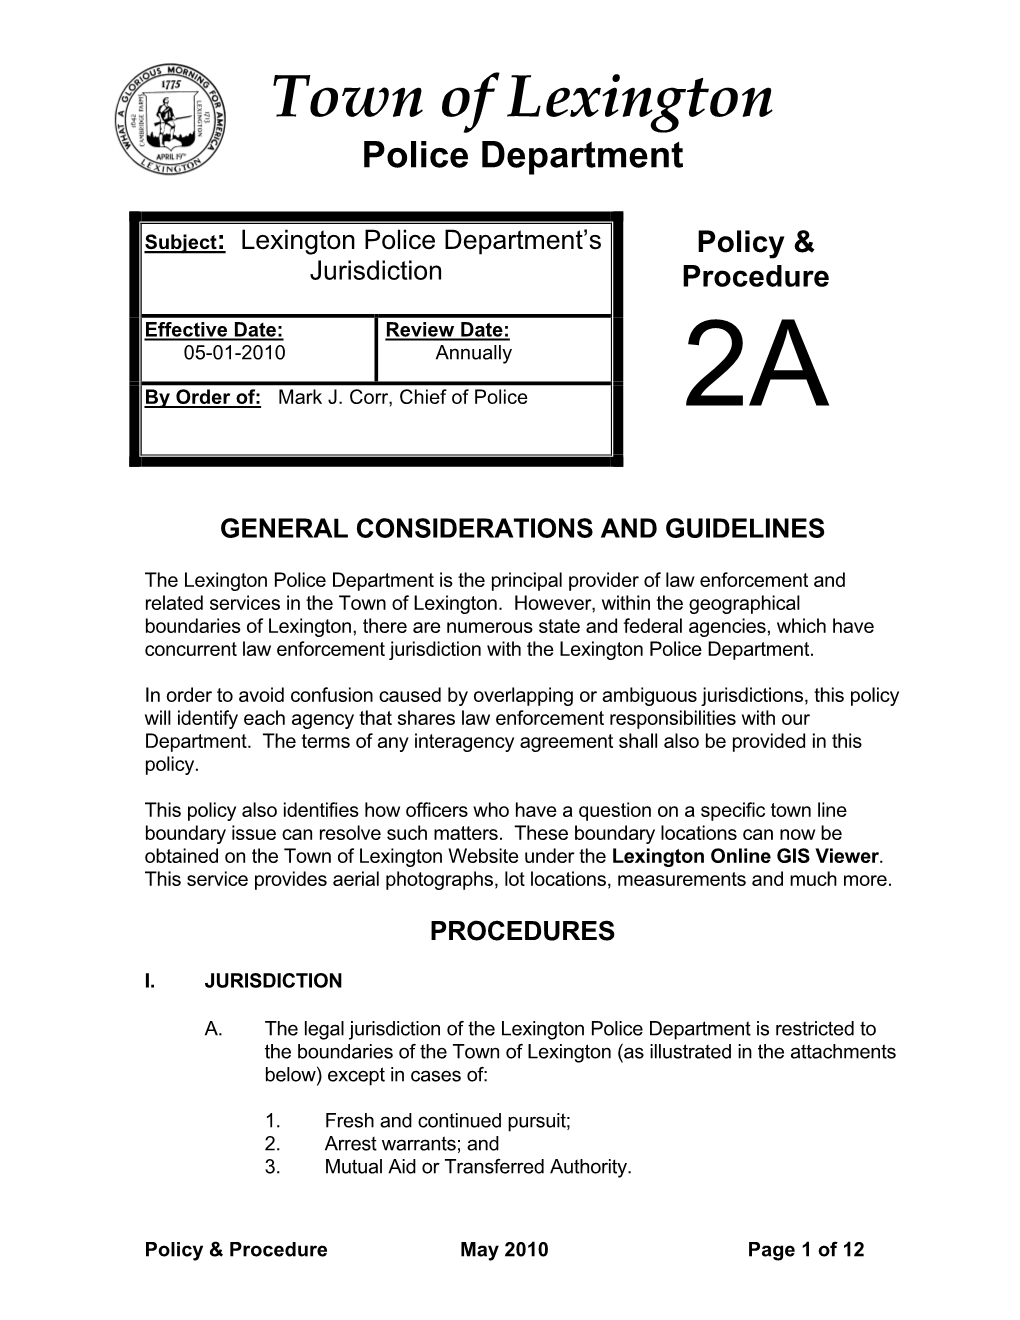 2A-Lexington Police Jurisdiction